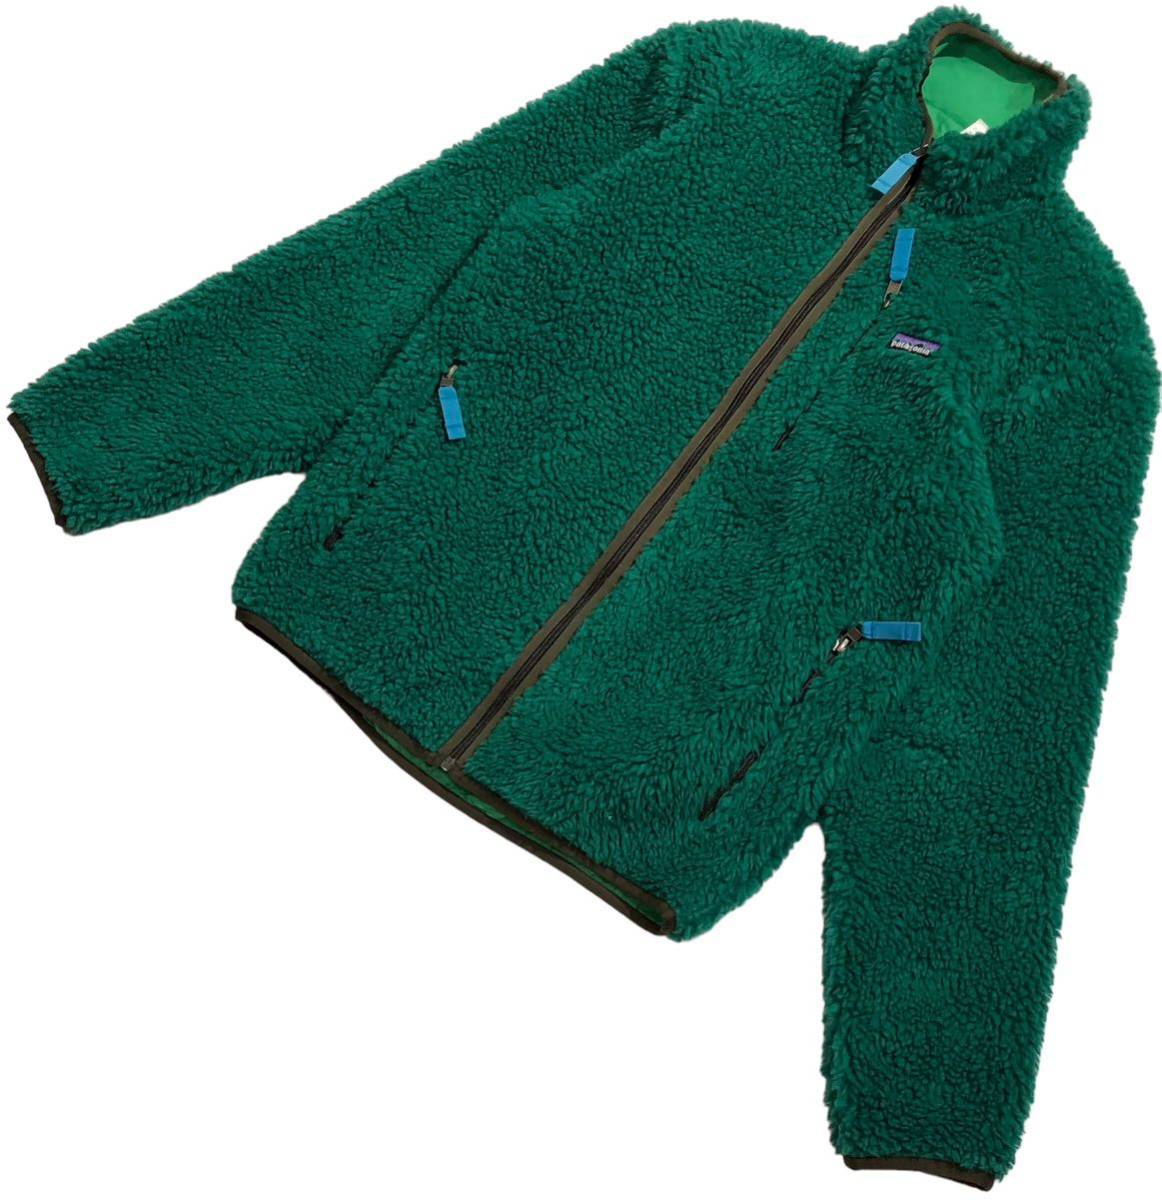 ■ Patagonia patagonia ■ Logo Label Classic Retro x Cardigan Bore Fleece Jacket Green S S